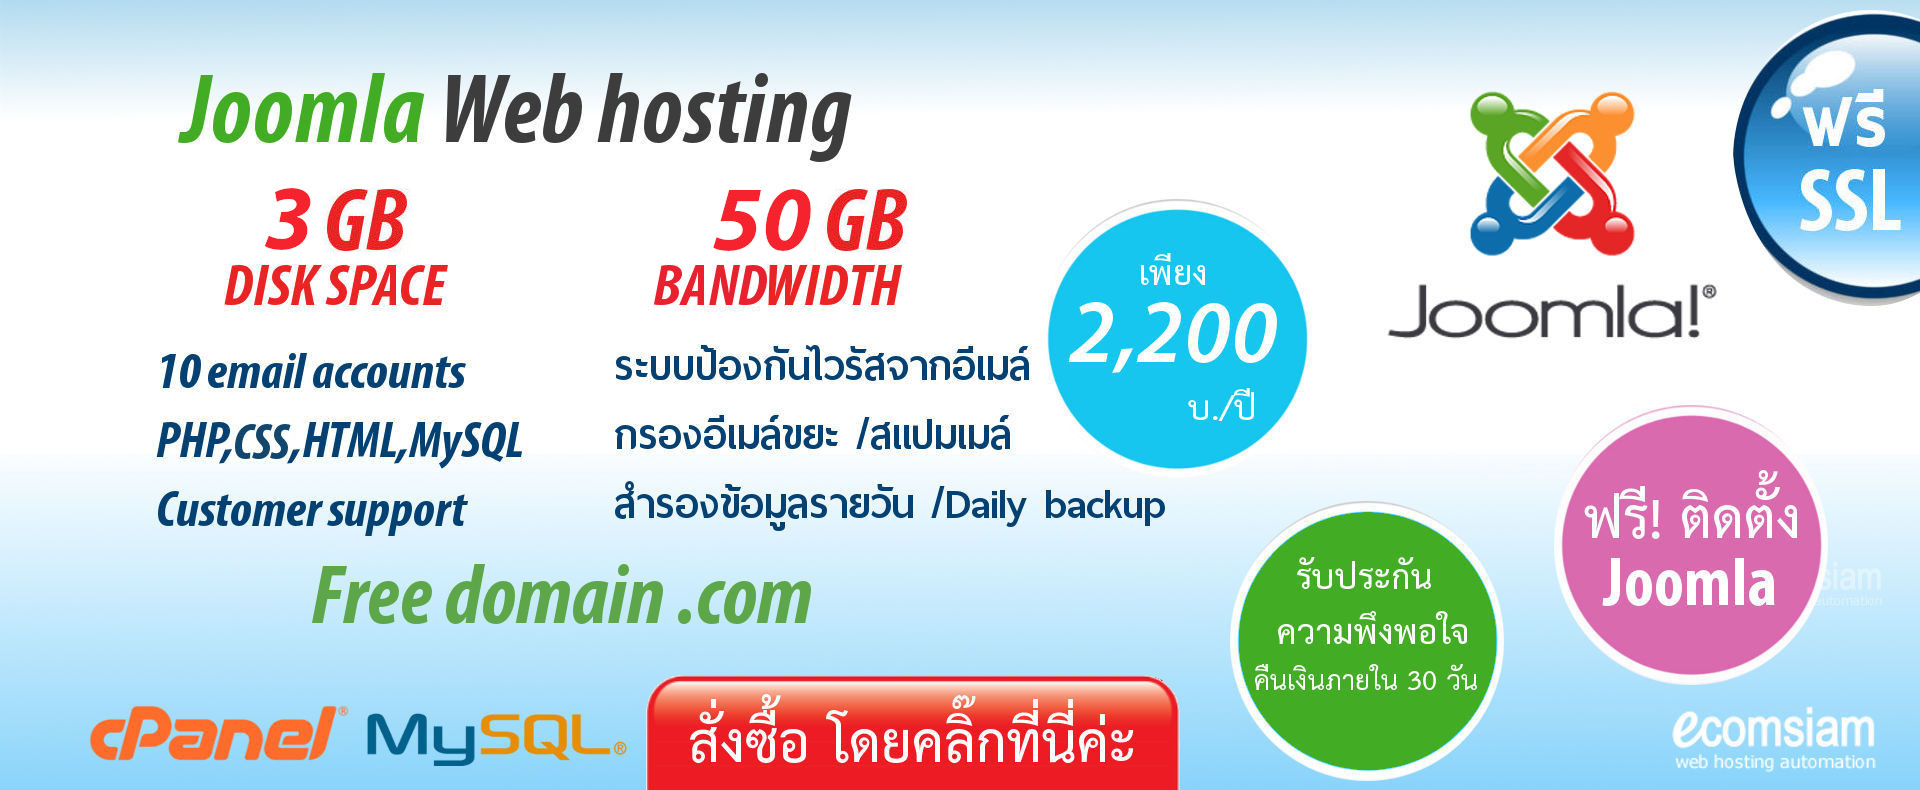 joomla web hosting thailand ฟรีโดเมน ฟรี SSL เว็บโฮสติ้งไทย ราคาเบาๆ เริ่มต้นเพียง 2200 บาทต่อปี บริการลูกค้า ดูแลดีโดย webhosting.com.co.th